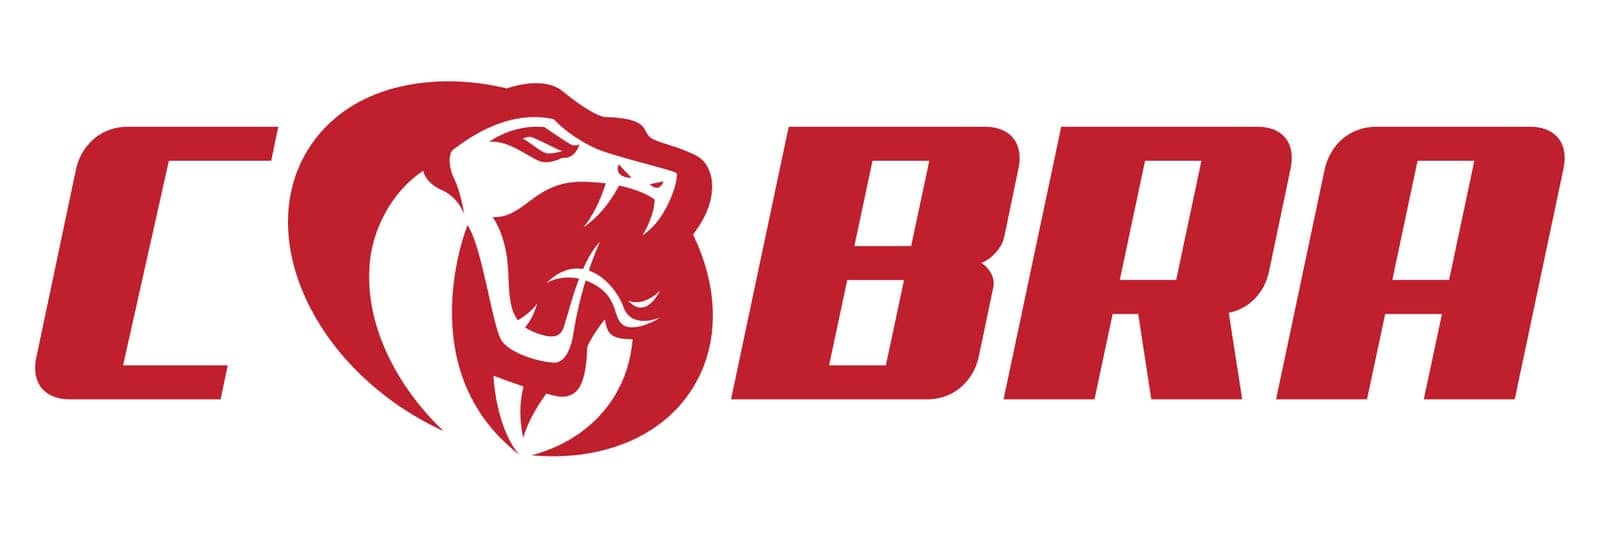 Mascot or logo symbol with red cobra snake.